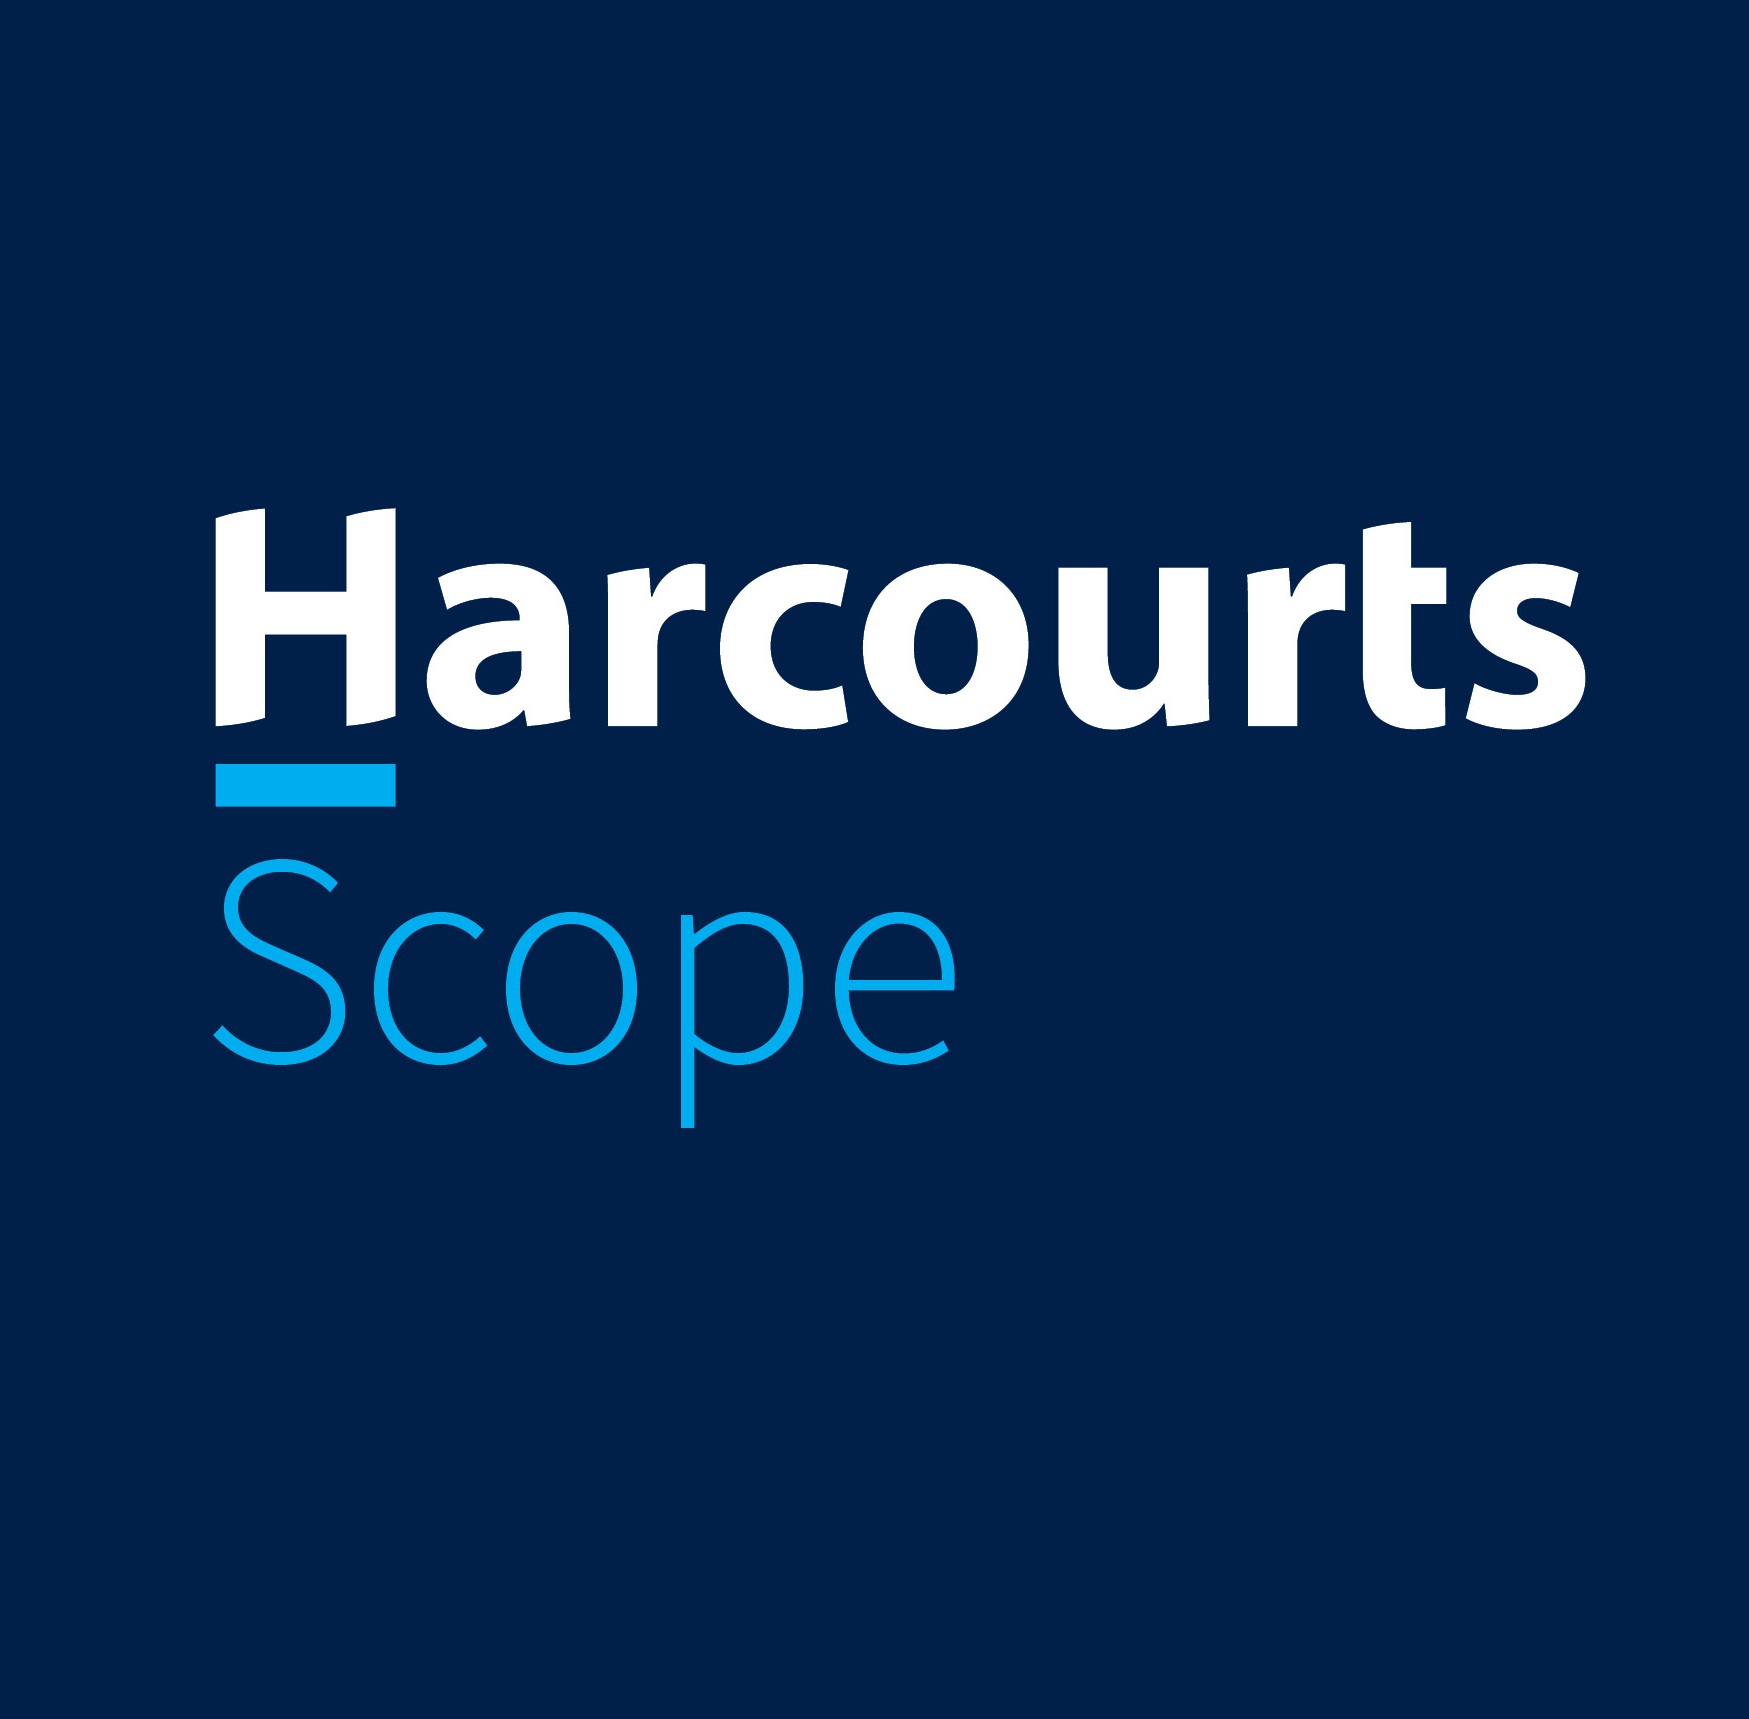 Harcourts Scope